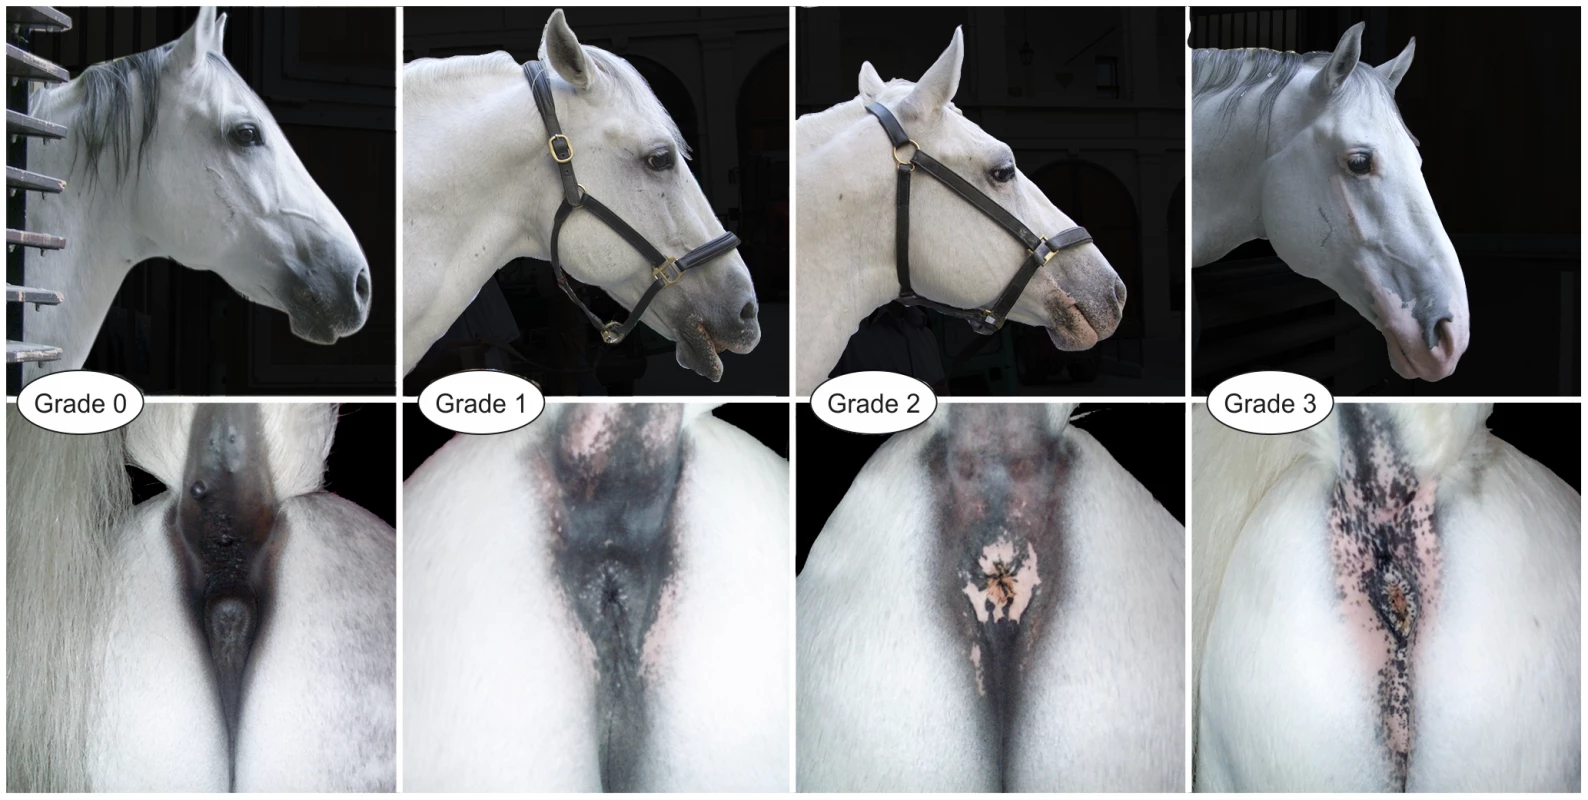 Variation of vitiligo grade in four grey Lipizzan horses.